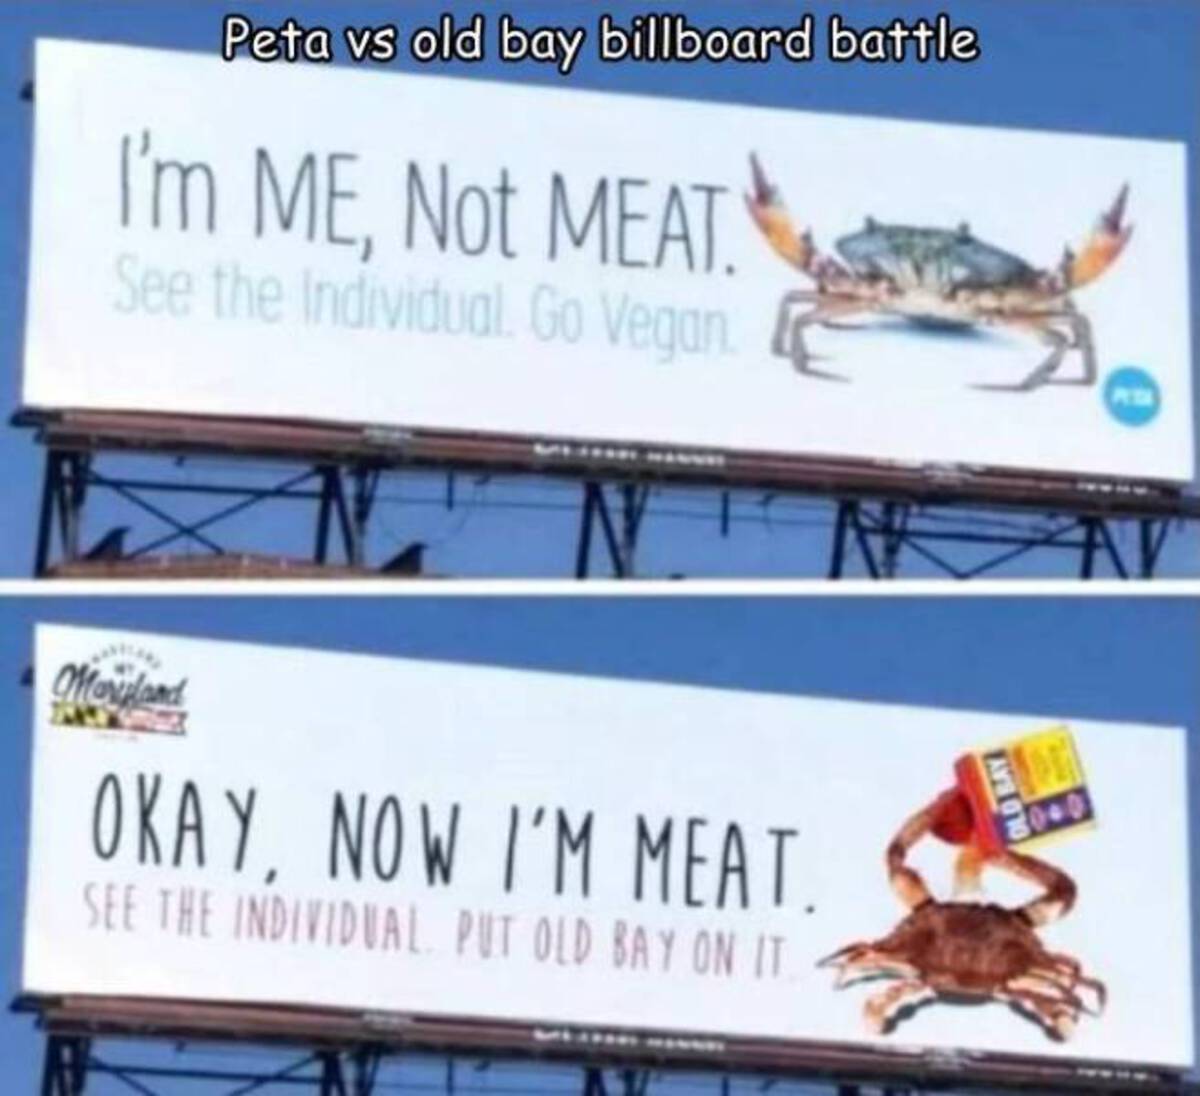 peta vs old bay - Peta vs old bay billboard battle I'm Me, Not Meat. See the Individual. Go Vegan Av Maryland Okay, Now I'M Meat. See The Individual Put Old Bay On It Ave 010 8000